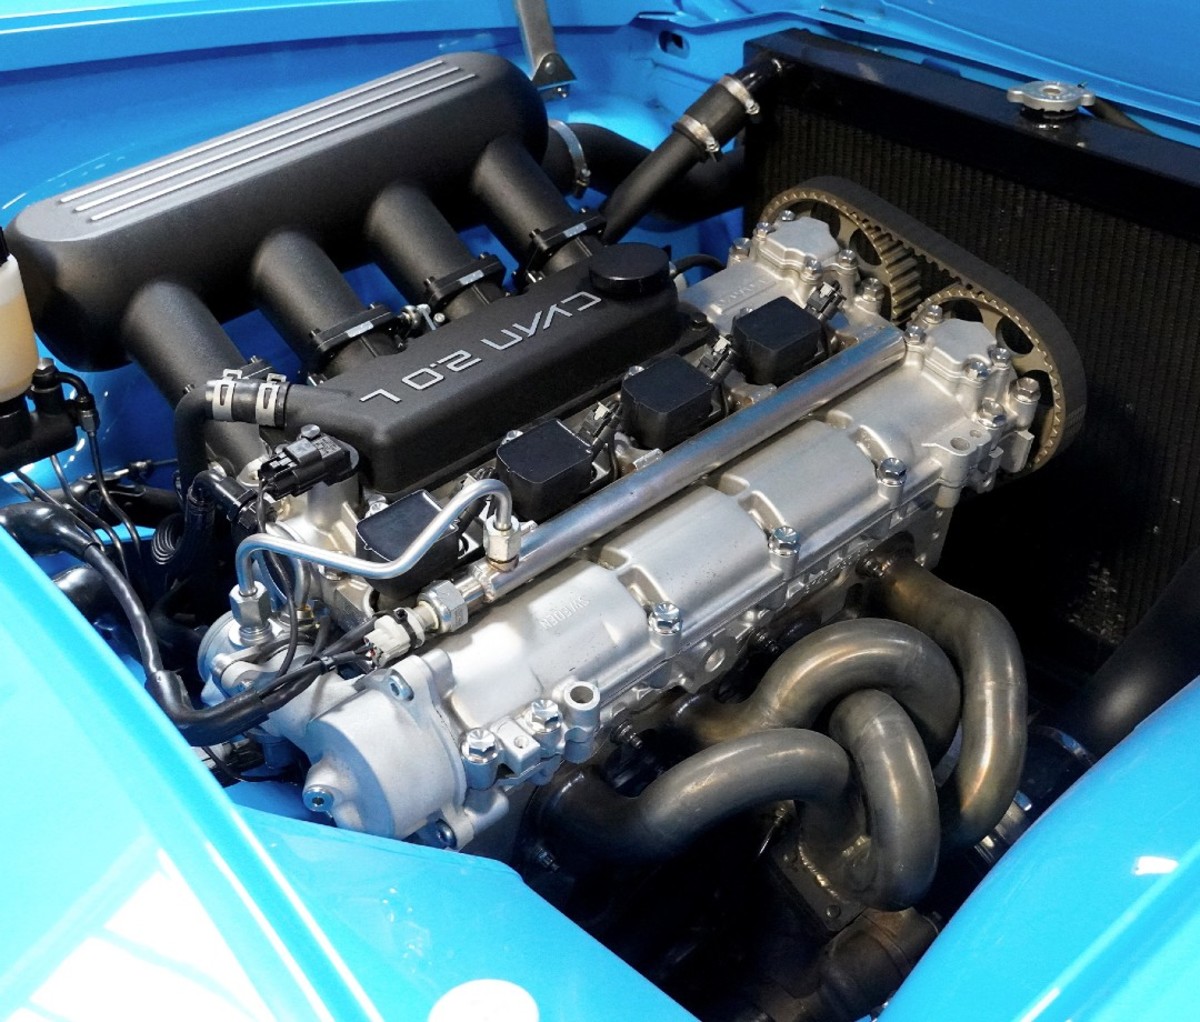 Engine inside blue car